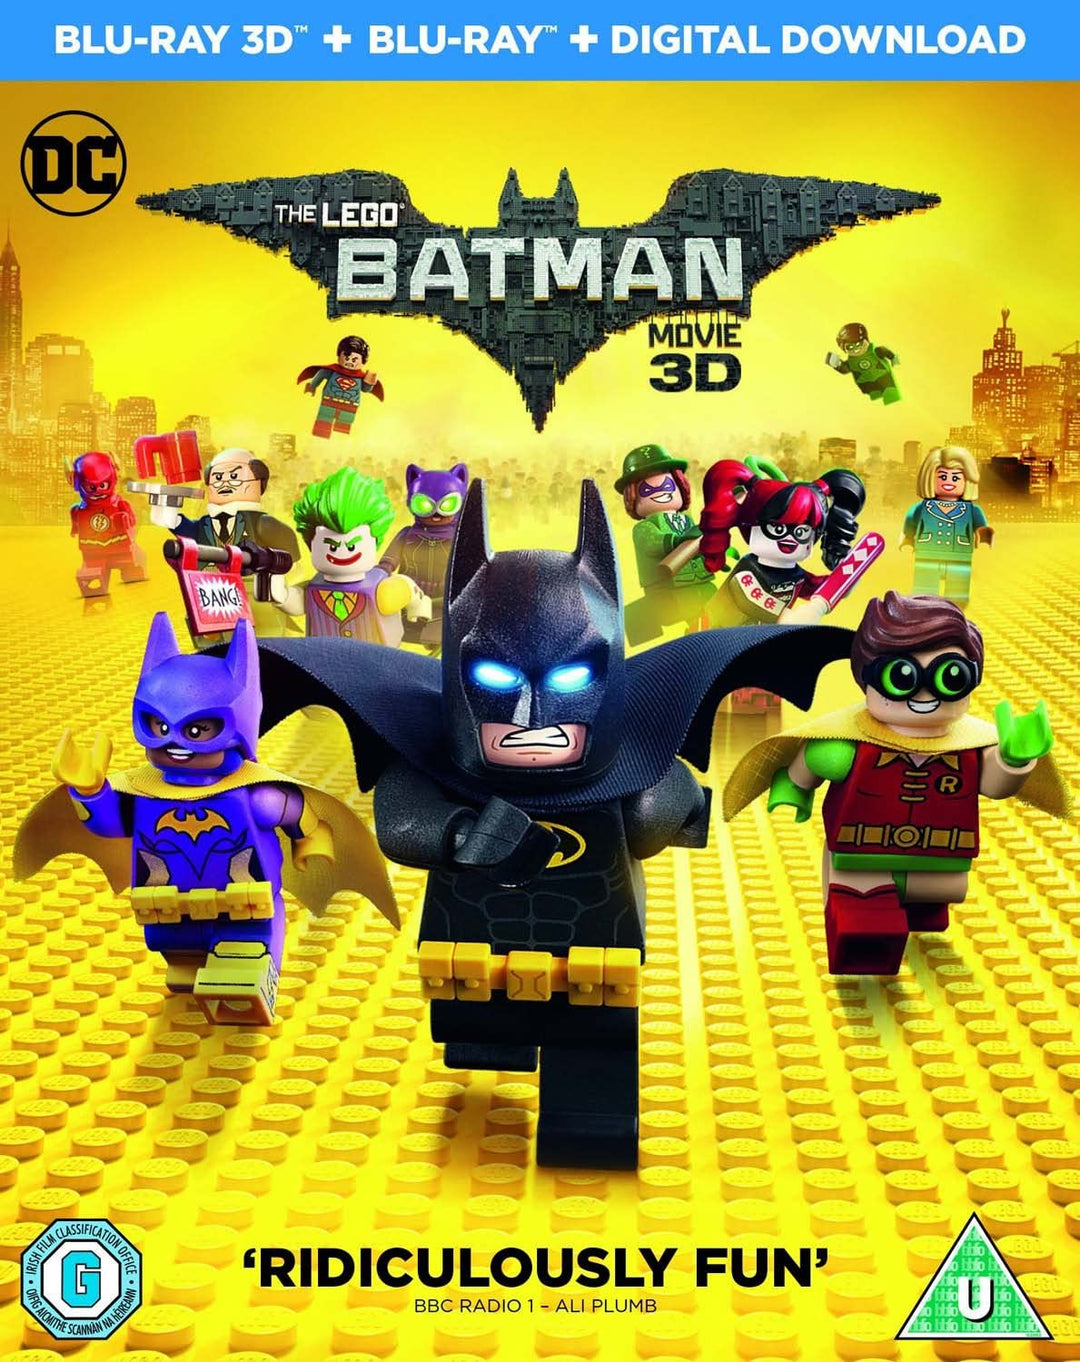 The LEGO Batman Movie Digital Download] [2017] - Adventure/Action [Blu-Ray]